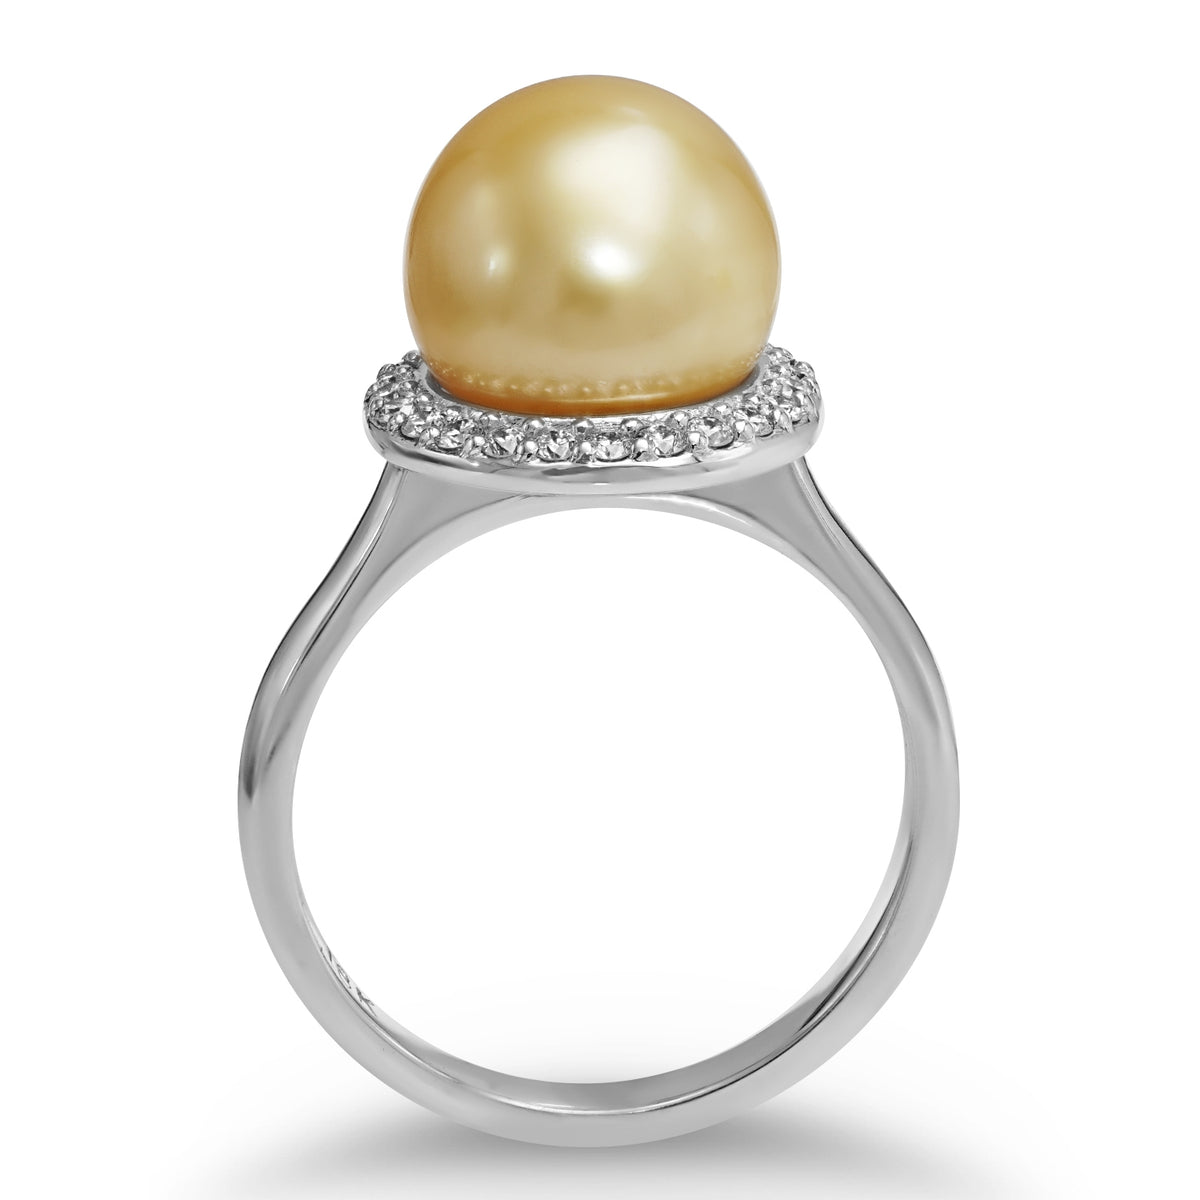 Haloed Golden Pearl Ring